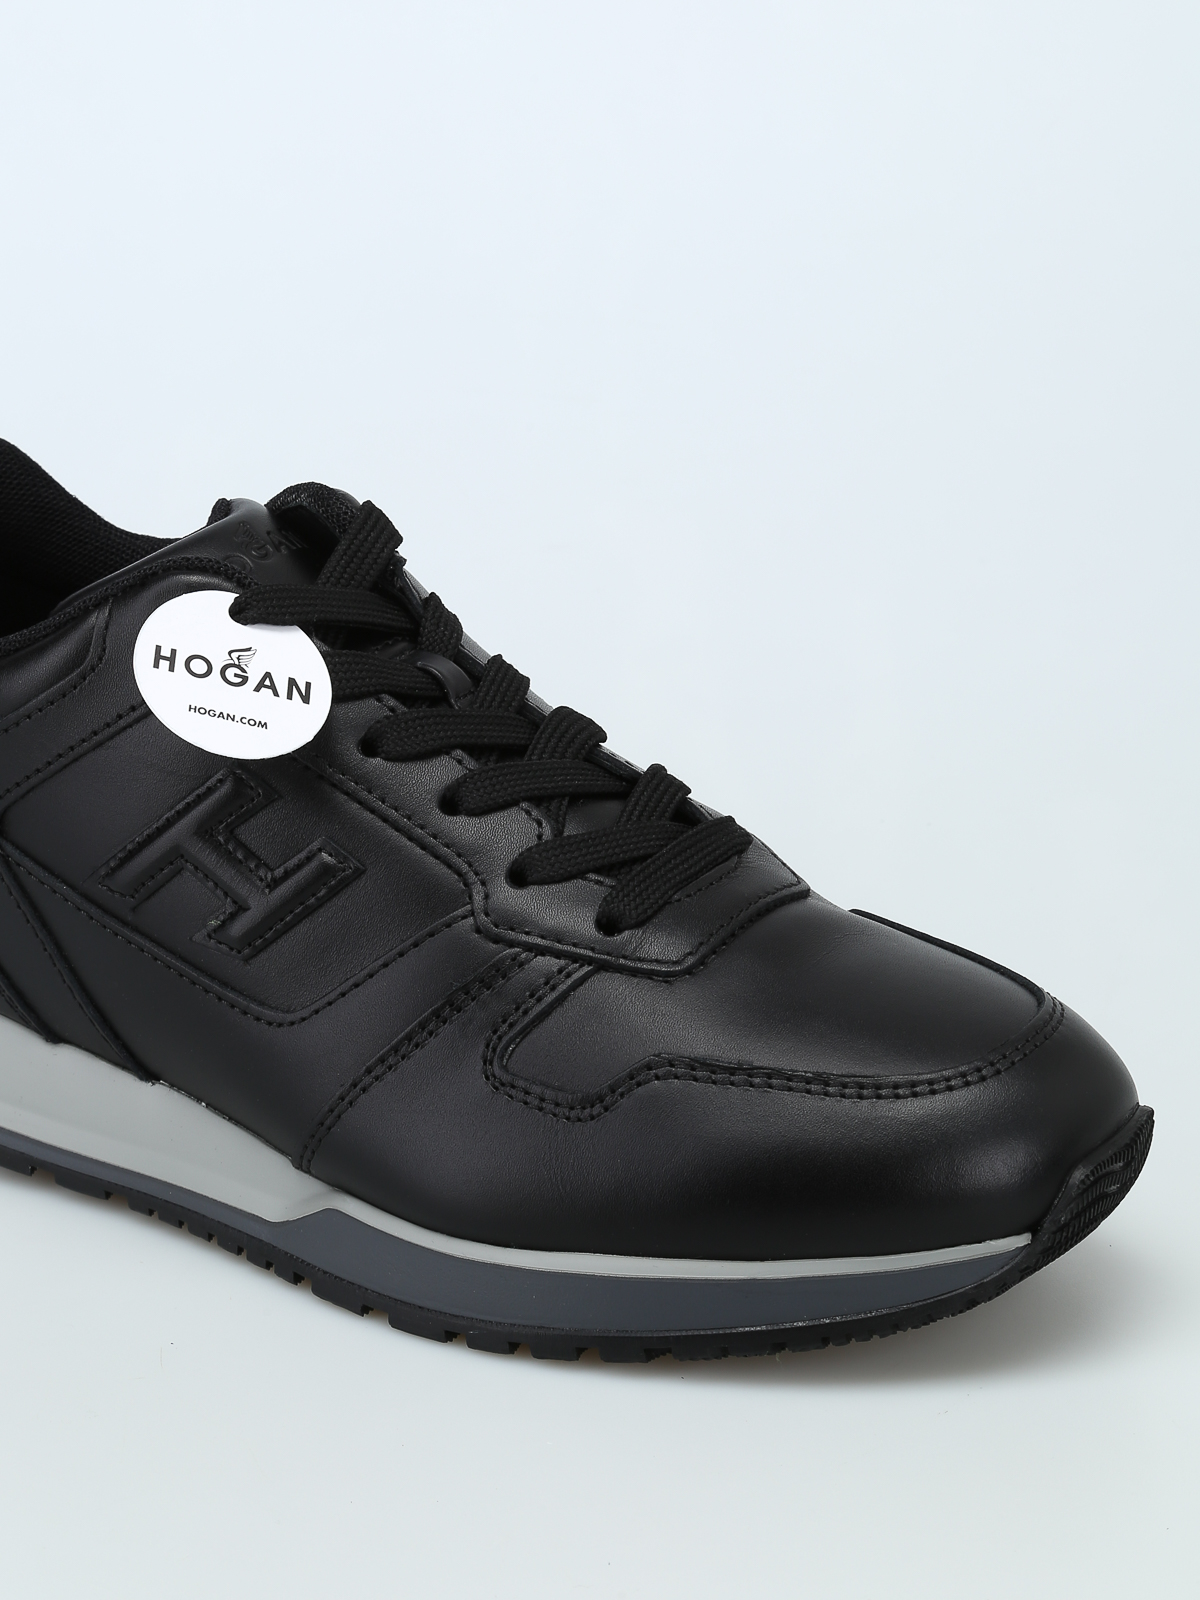 Hogan - H321 black leather sneakers 